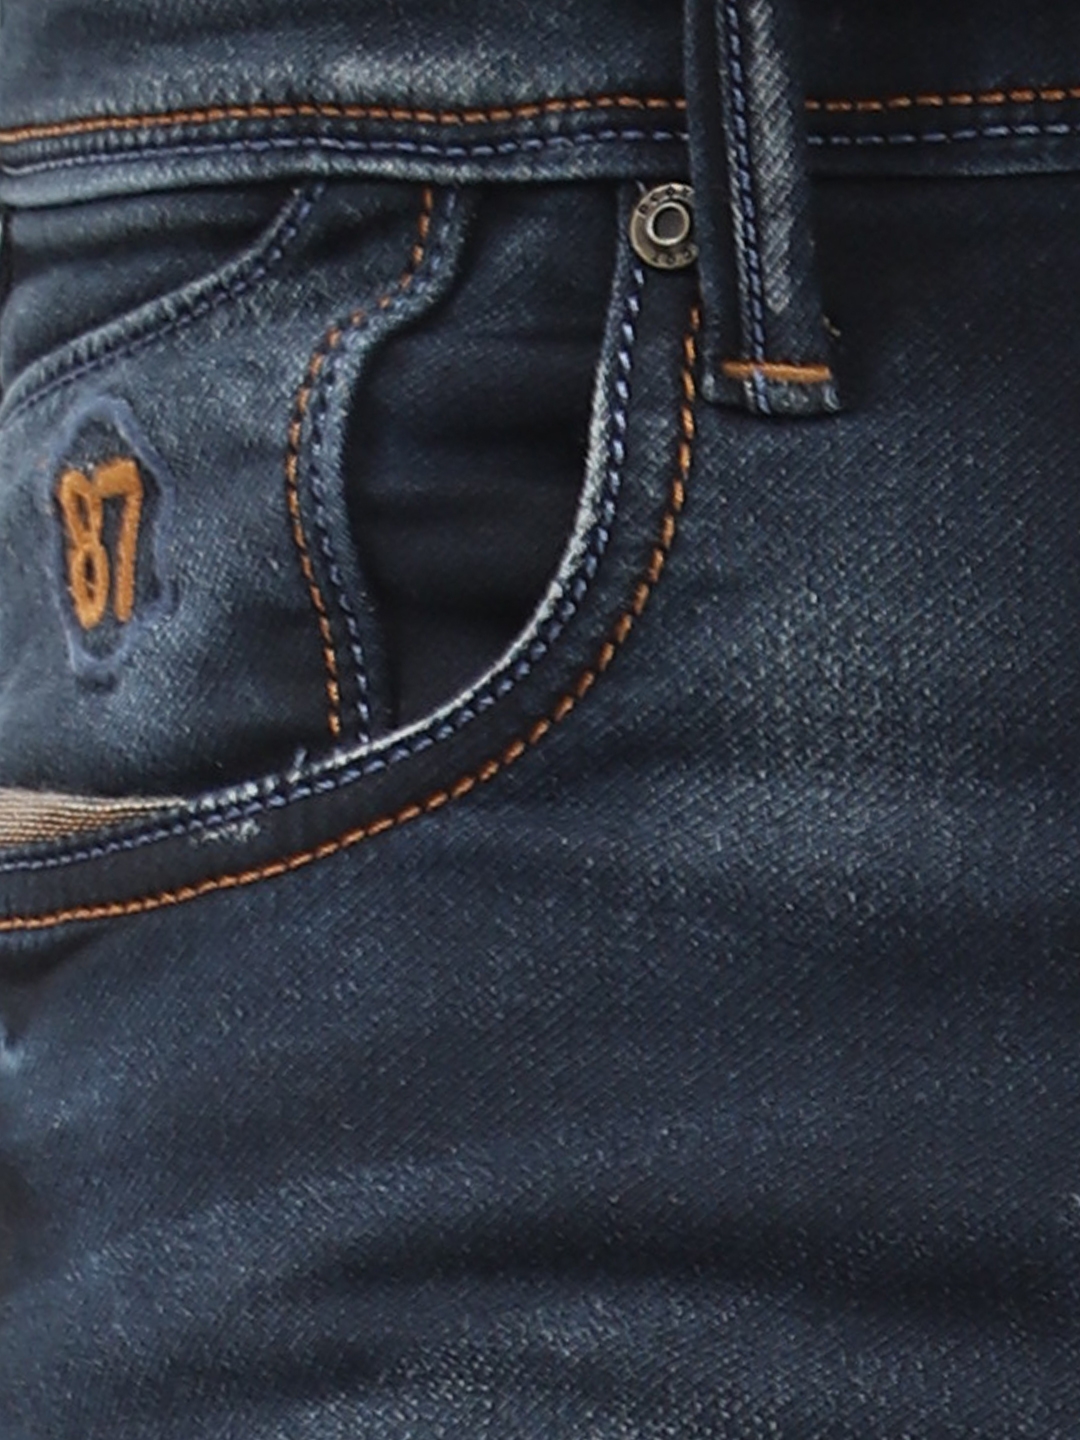 D'cot by Donear | D'cot by Donear Men's Blue Cotton Jeans 5